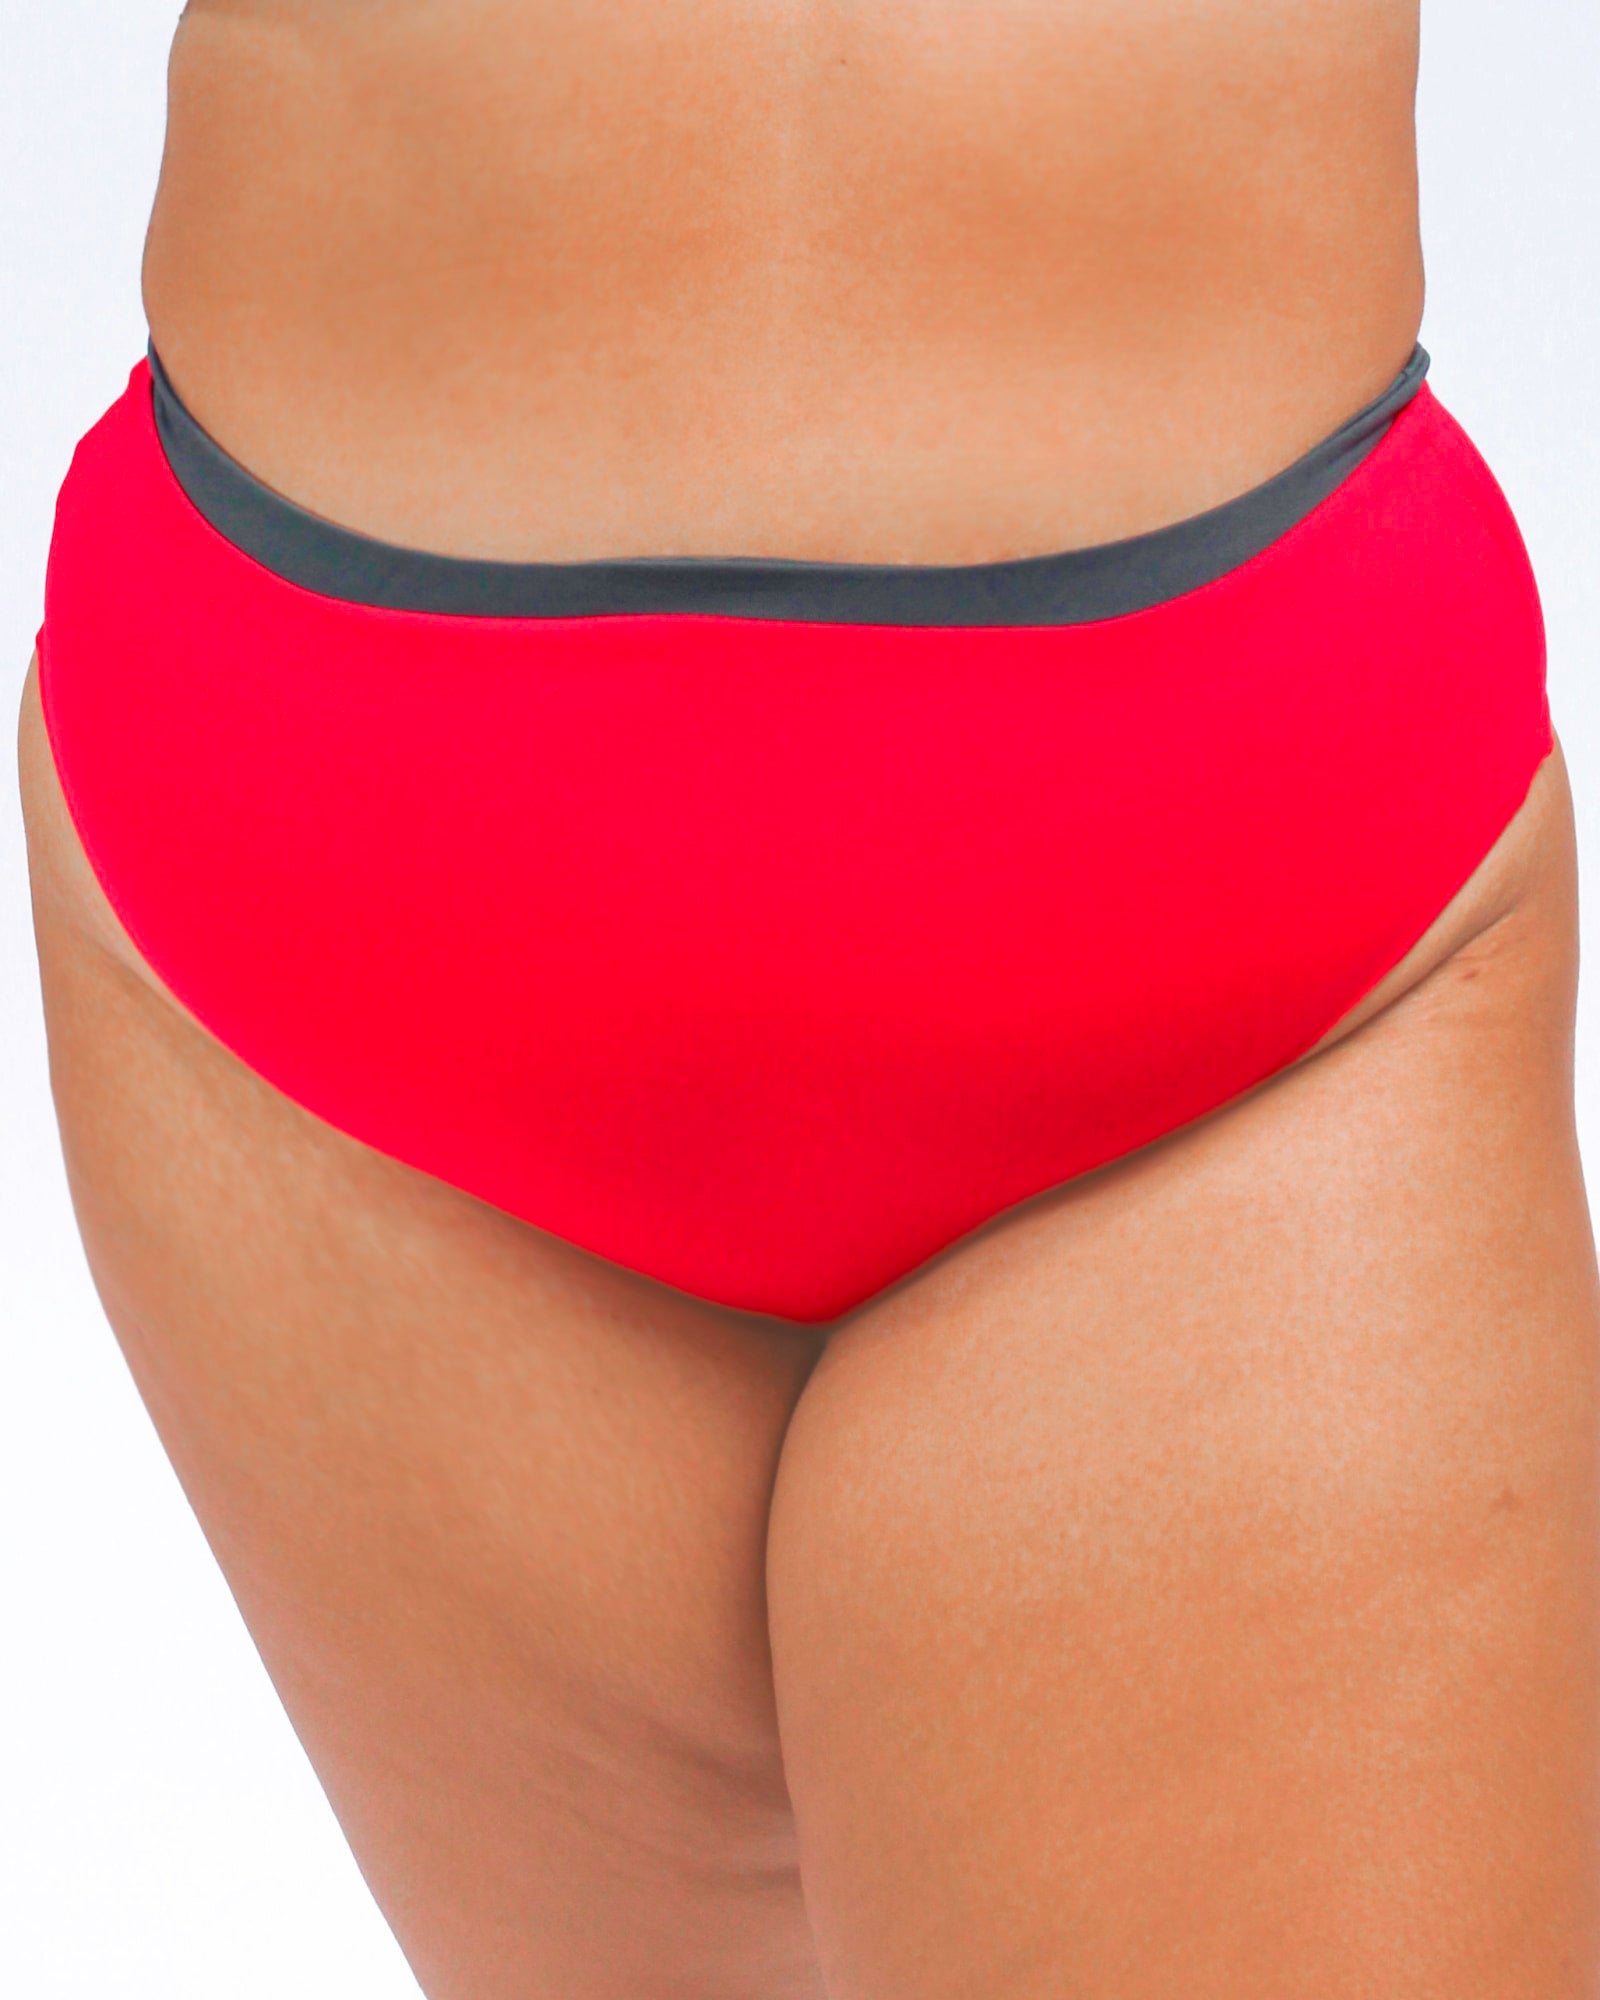 Rafaela contouring bikini bottom | Red and Dark Grey